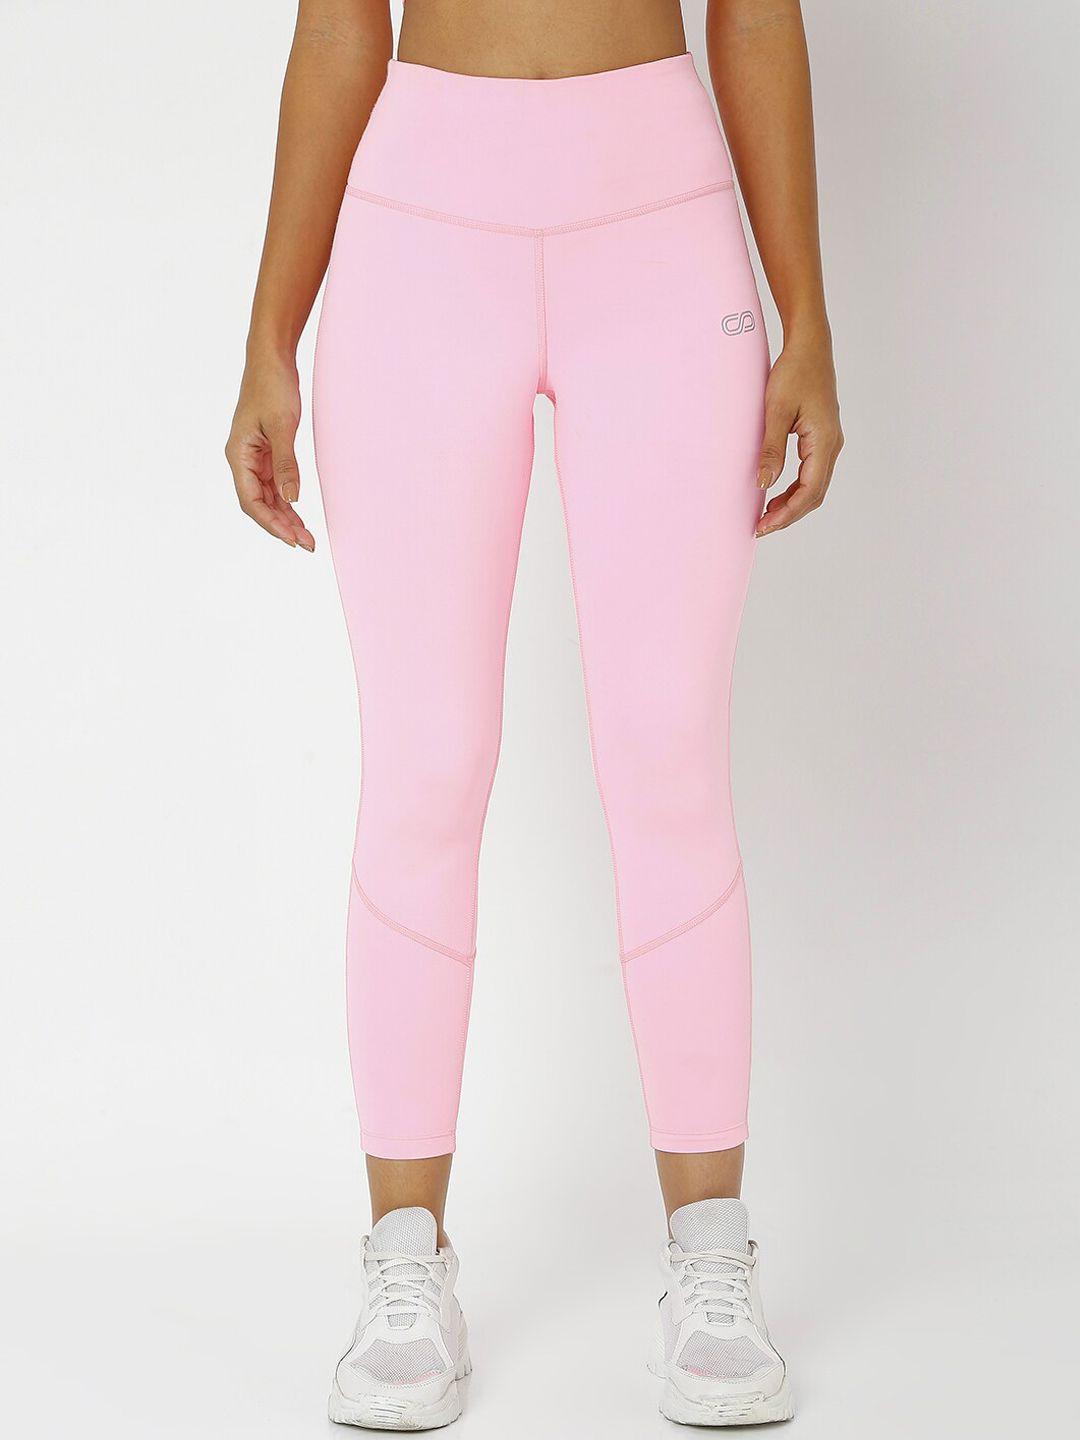 silvertraq women pink solid ankle-length leggings